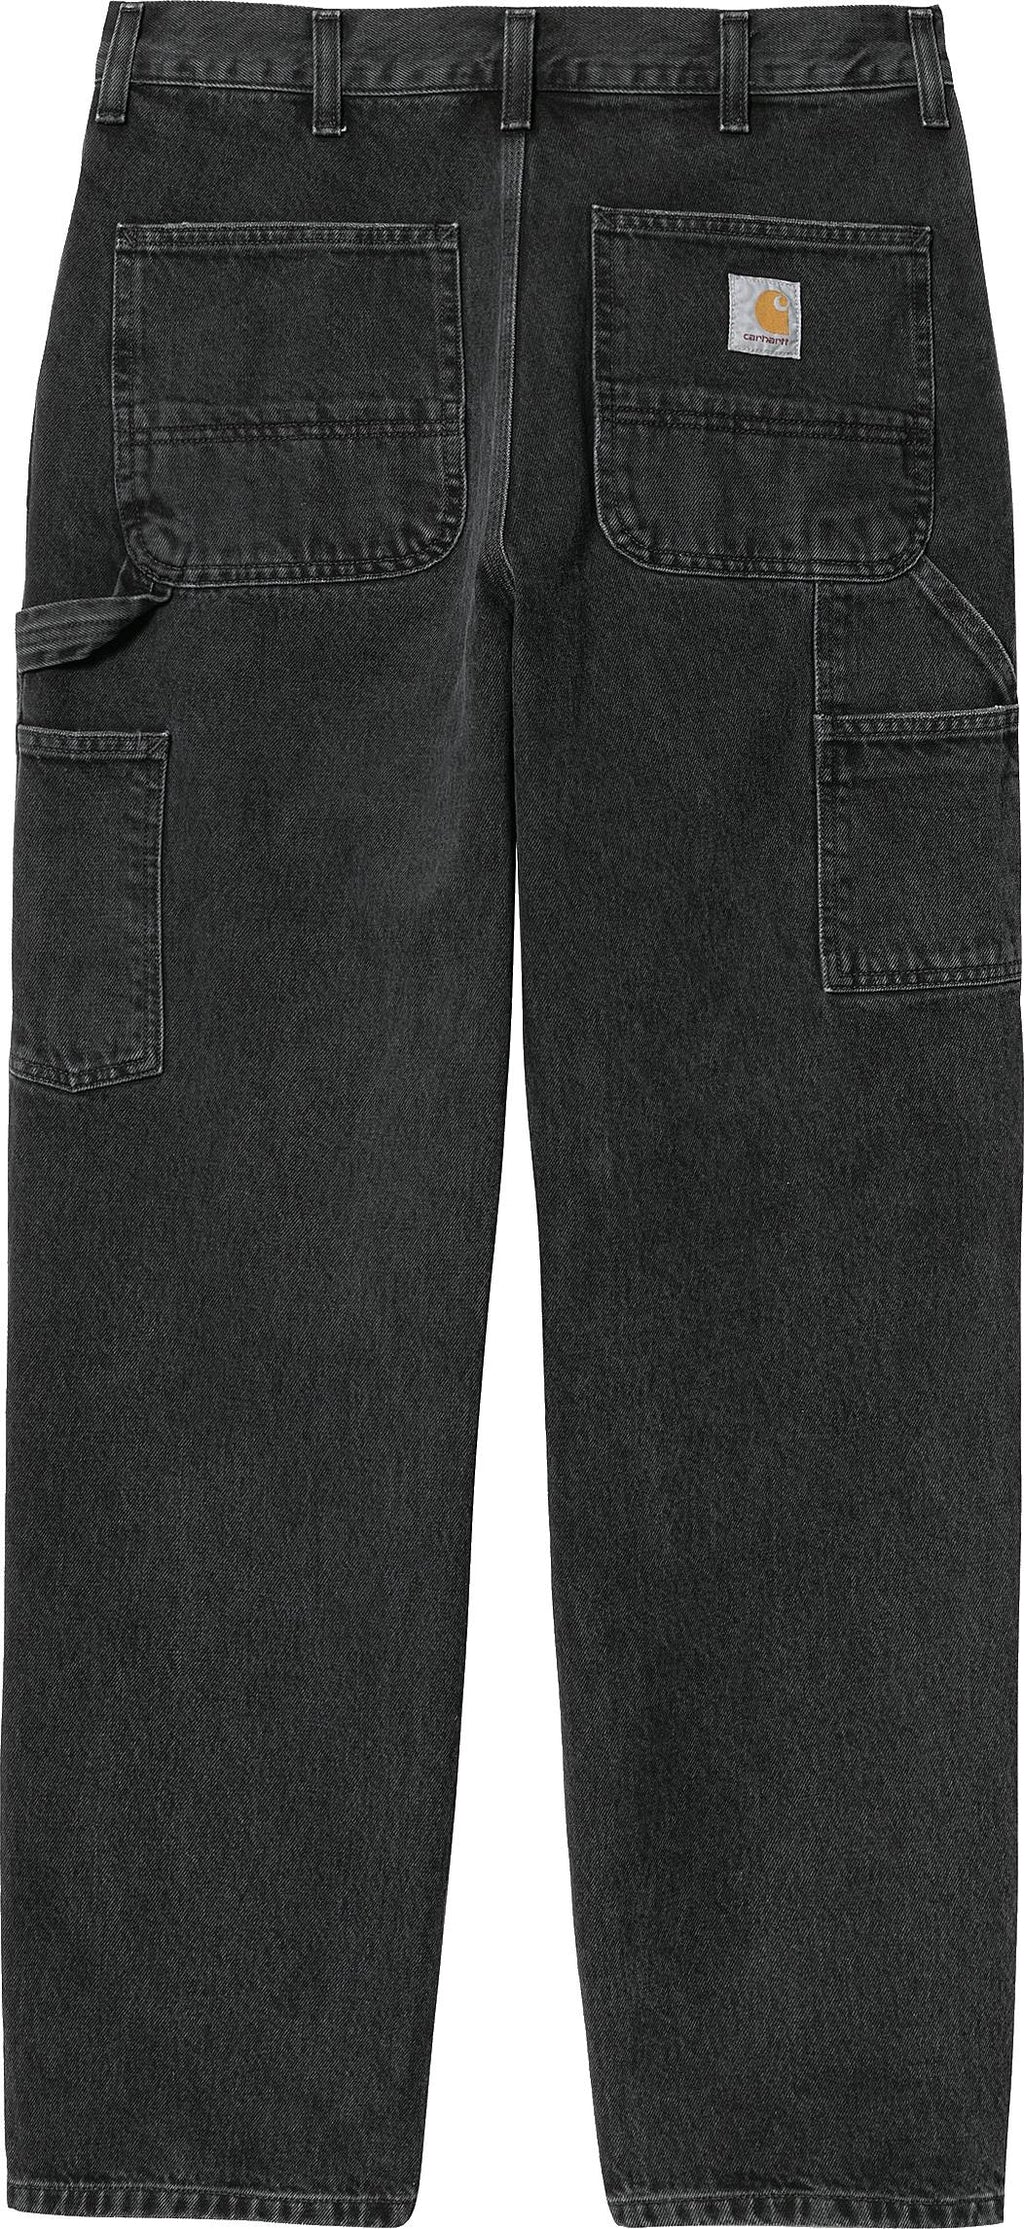  Carhartt Wip Jeans Single Knee Pant Black Stone Washed Nero Uomo - 1